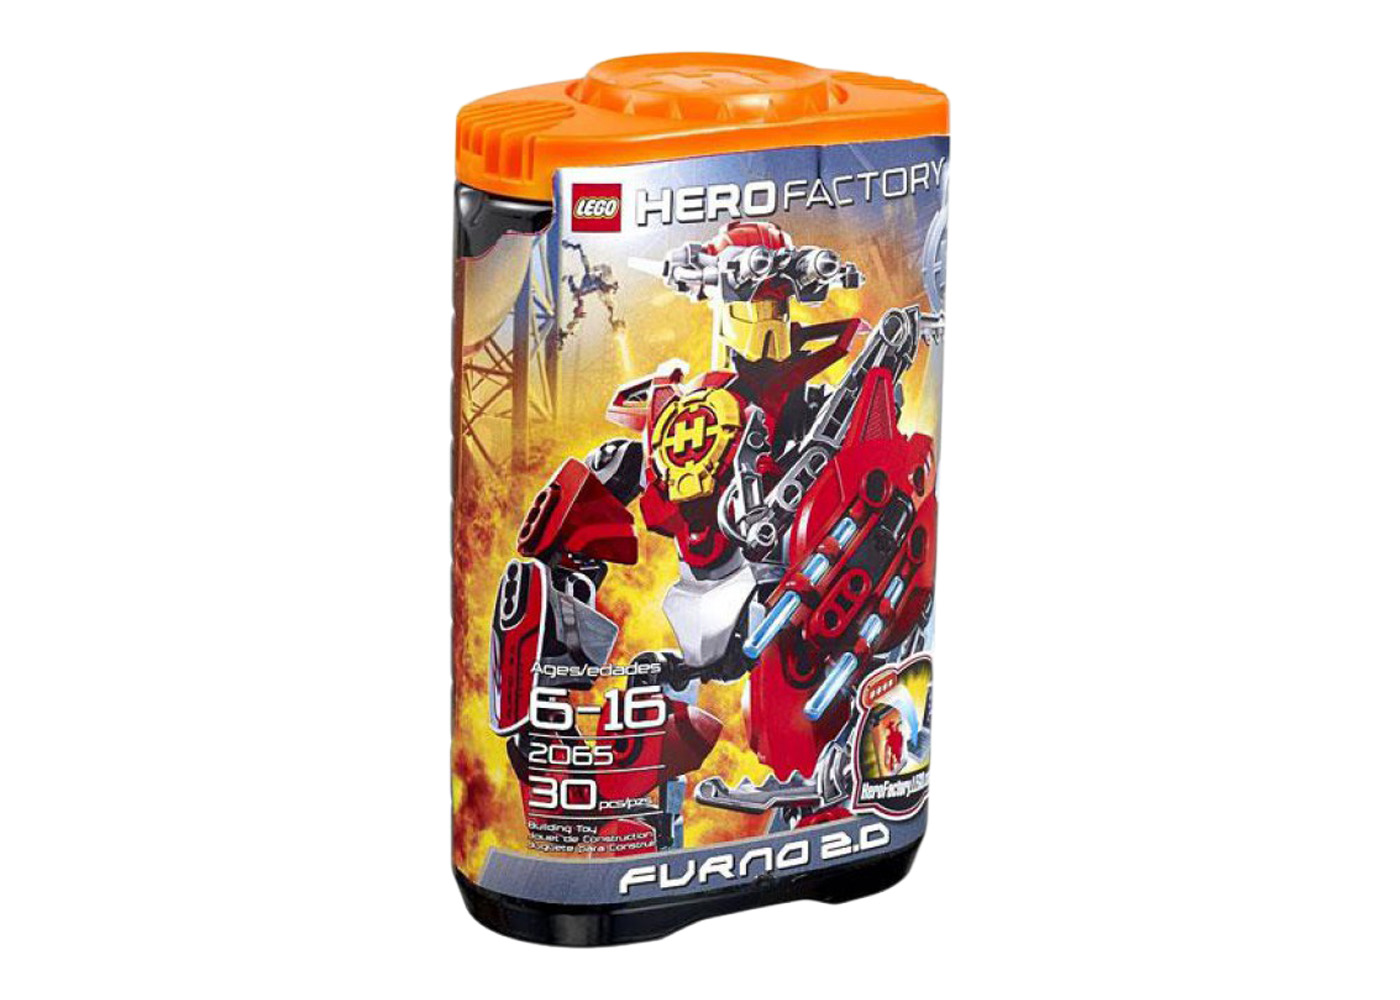 LEGO Hero Factory Furno 2.0 Set 2065 - TW